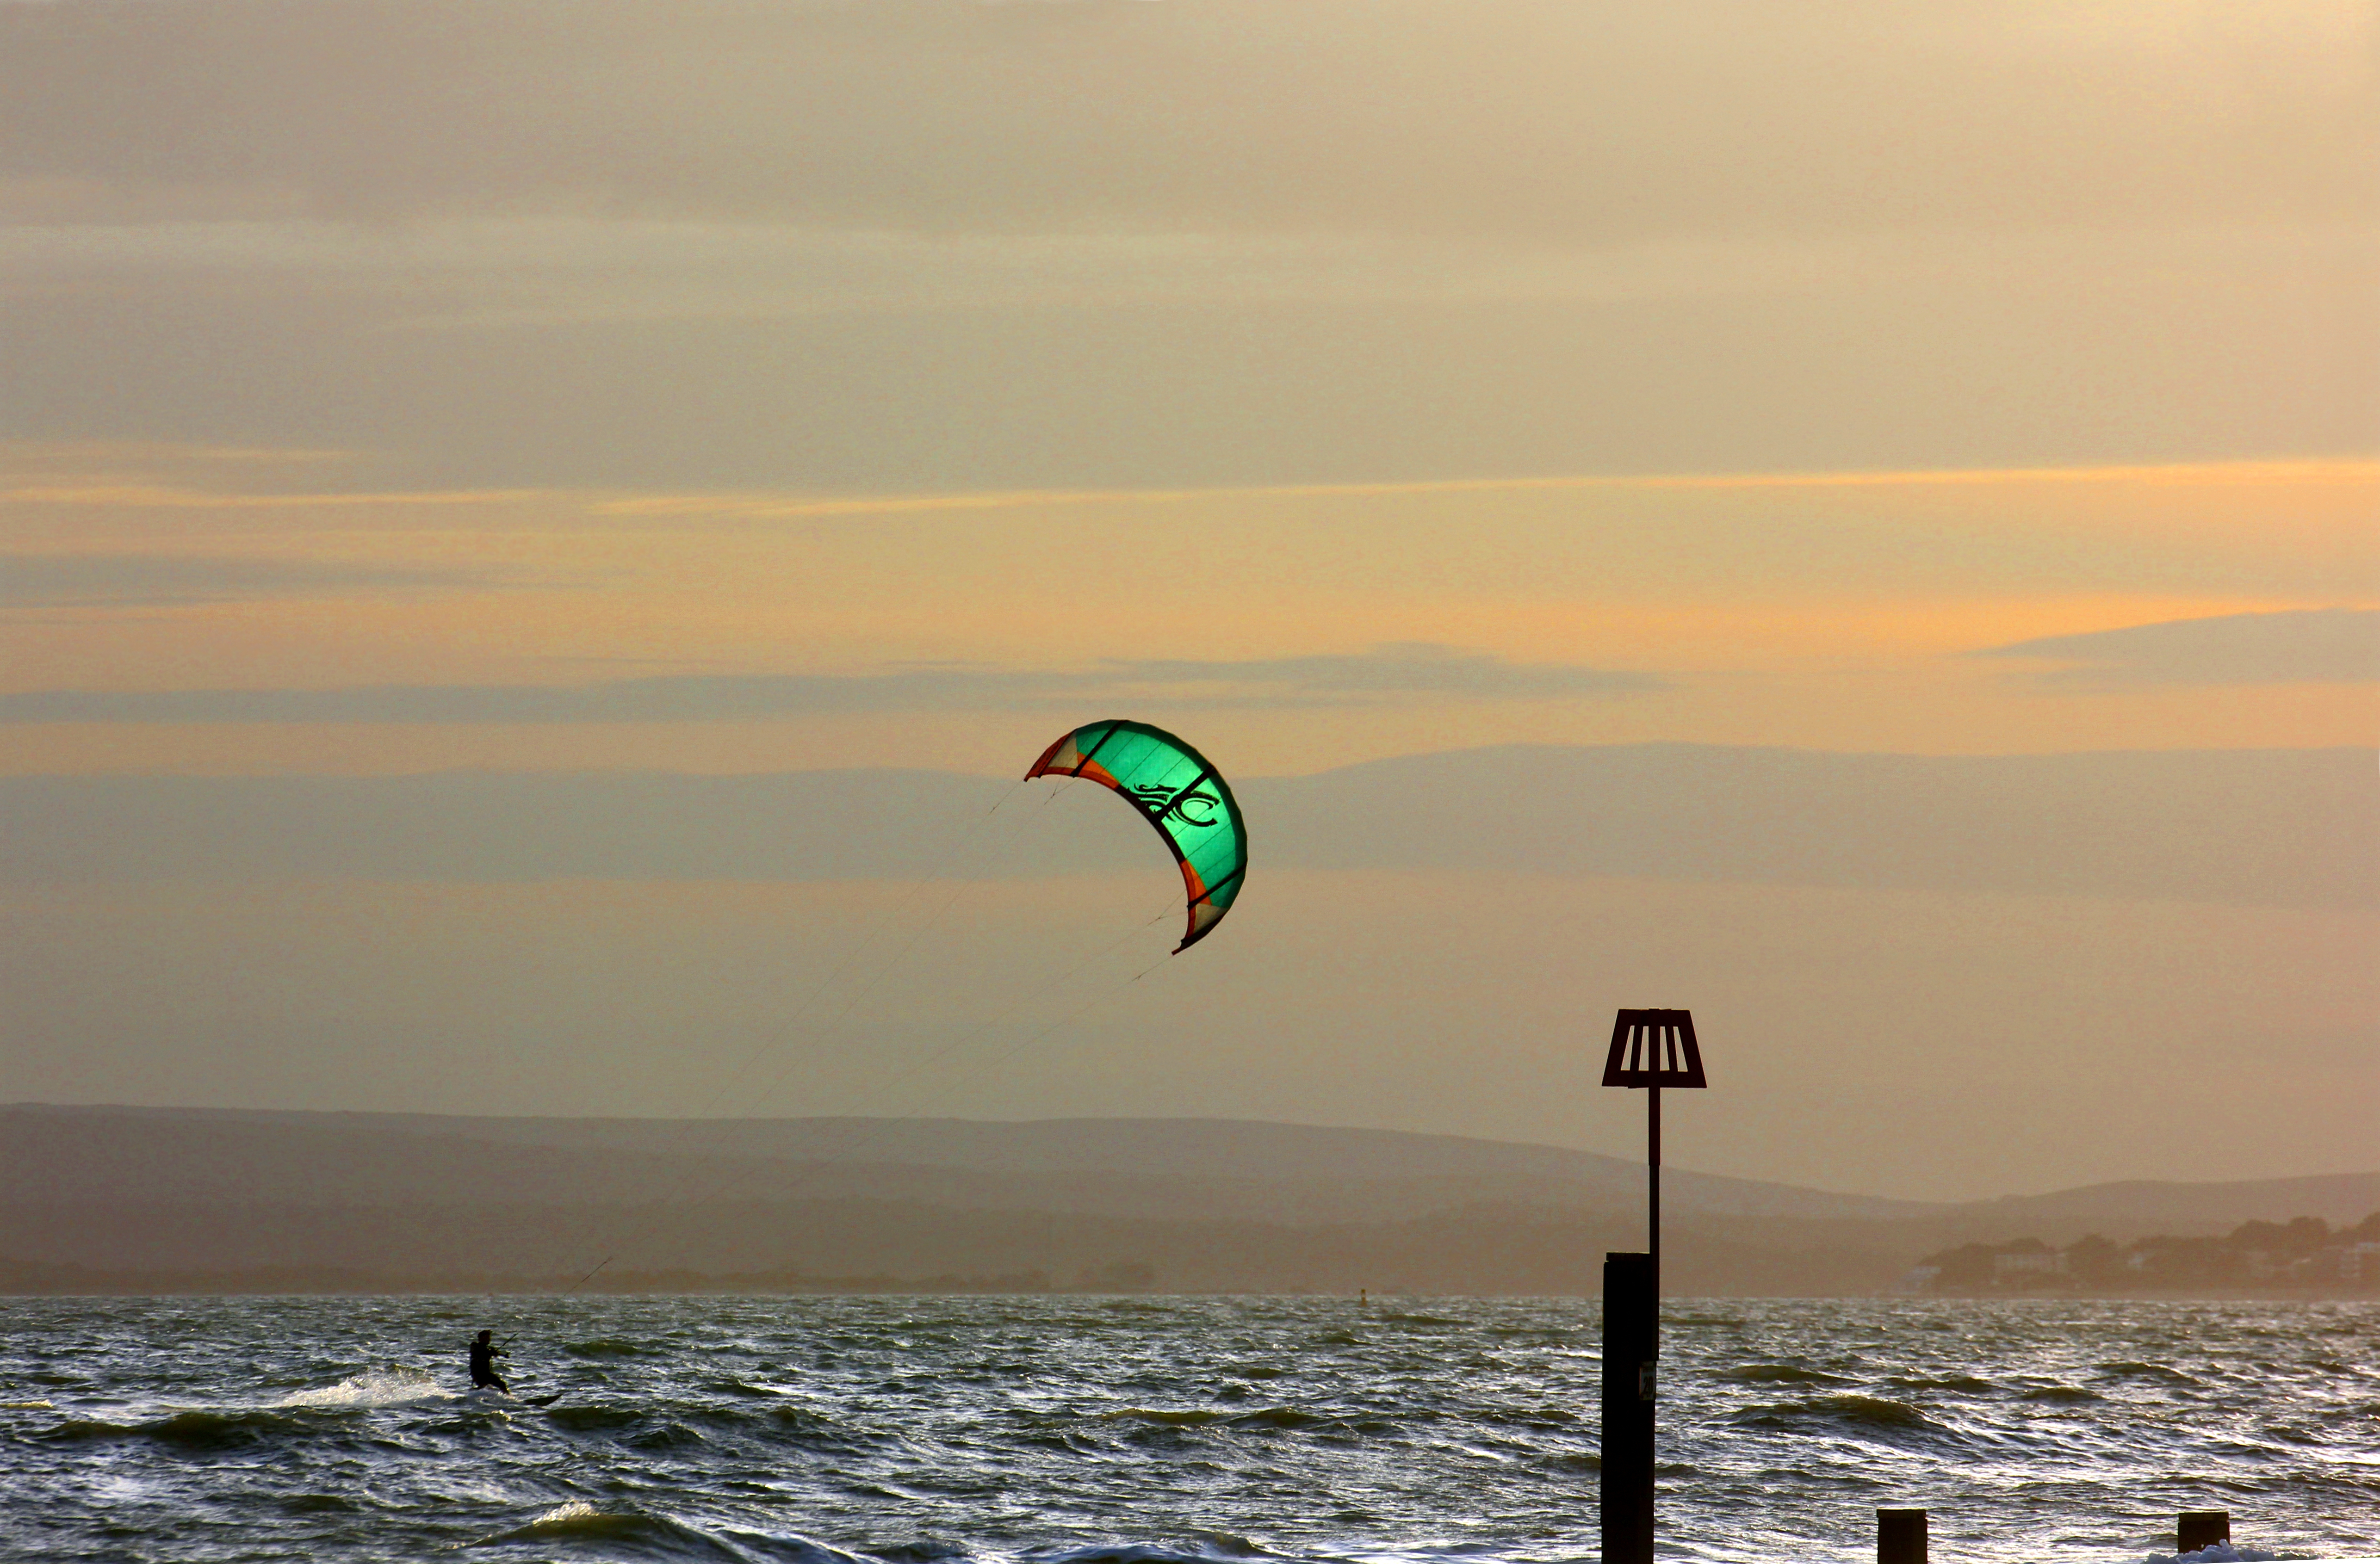 kite surfer, Activity, Energy, Kite, Power, HQ Photo